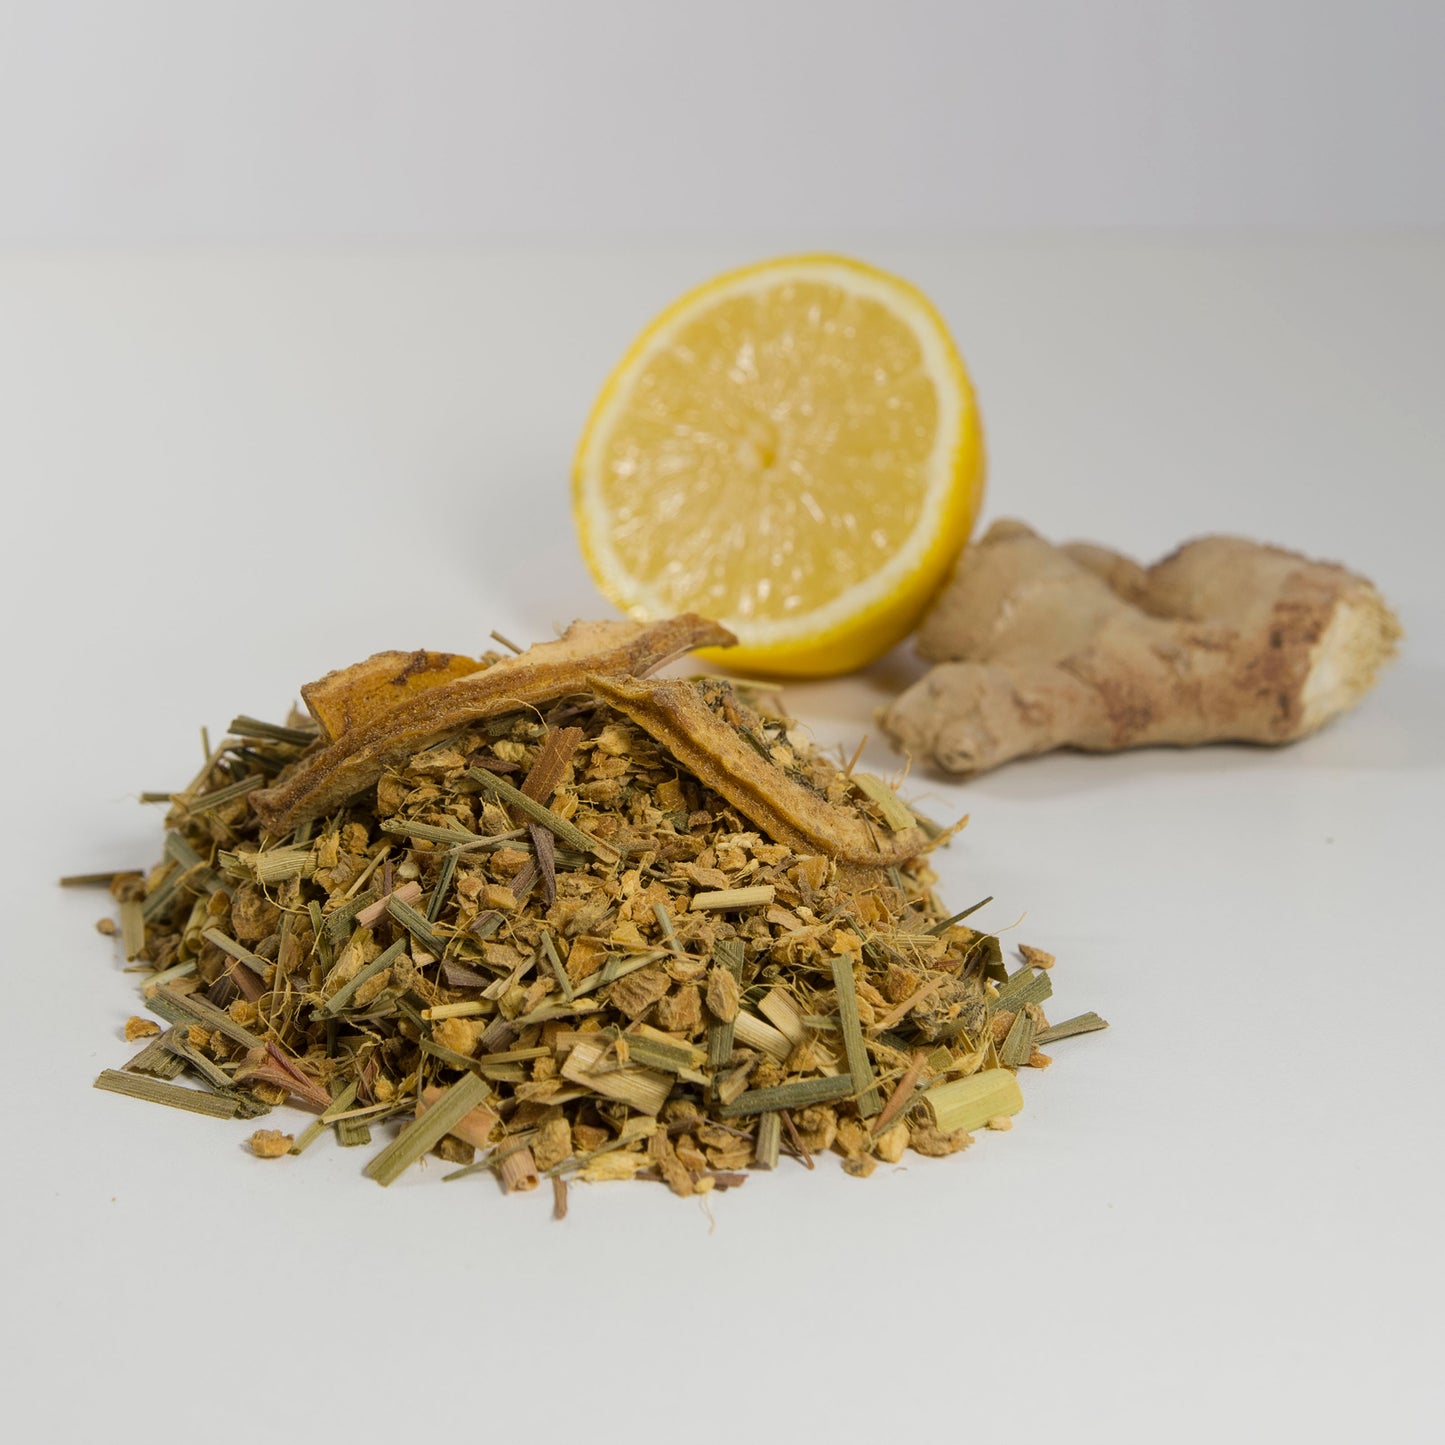 Ginger root, lemon pieces, lemon grass, natural lemon aroma.